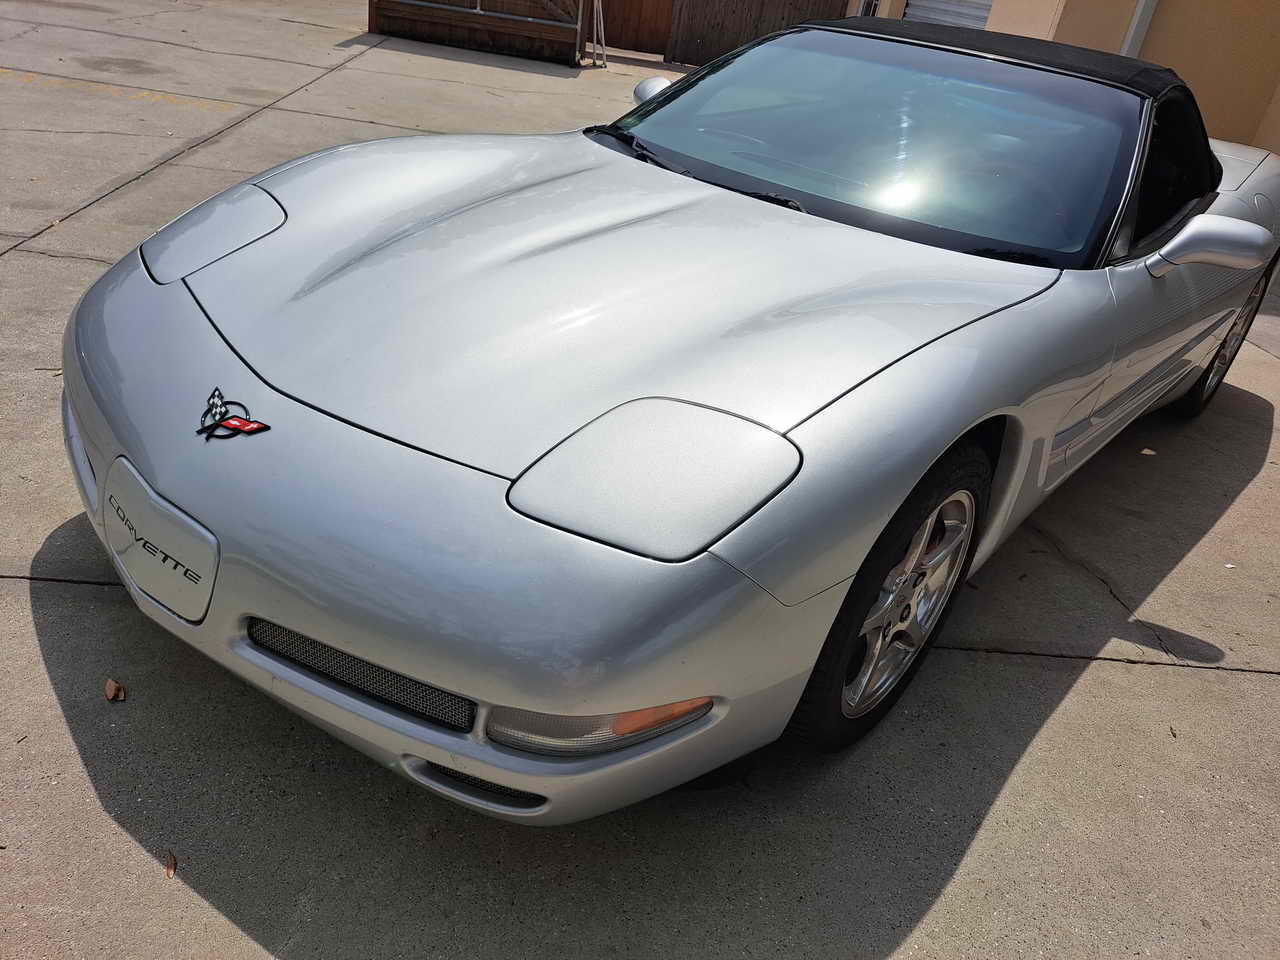 2002 Corvette Convertible QuickSilver Metallic